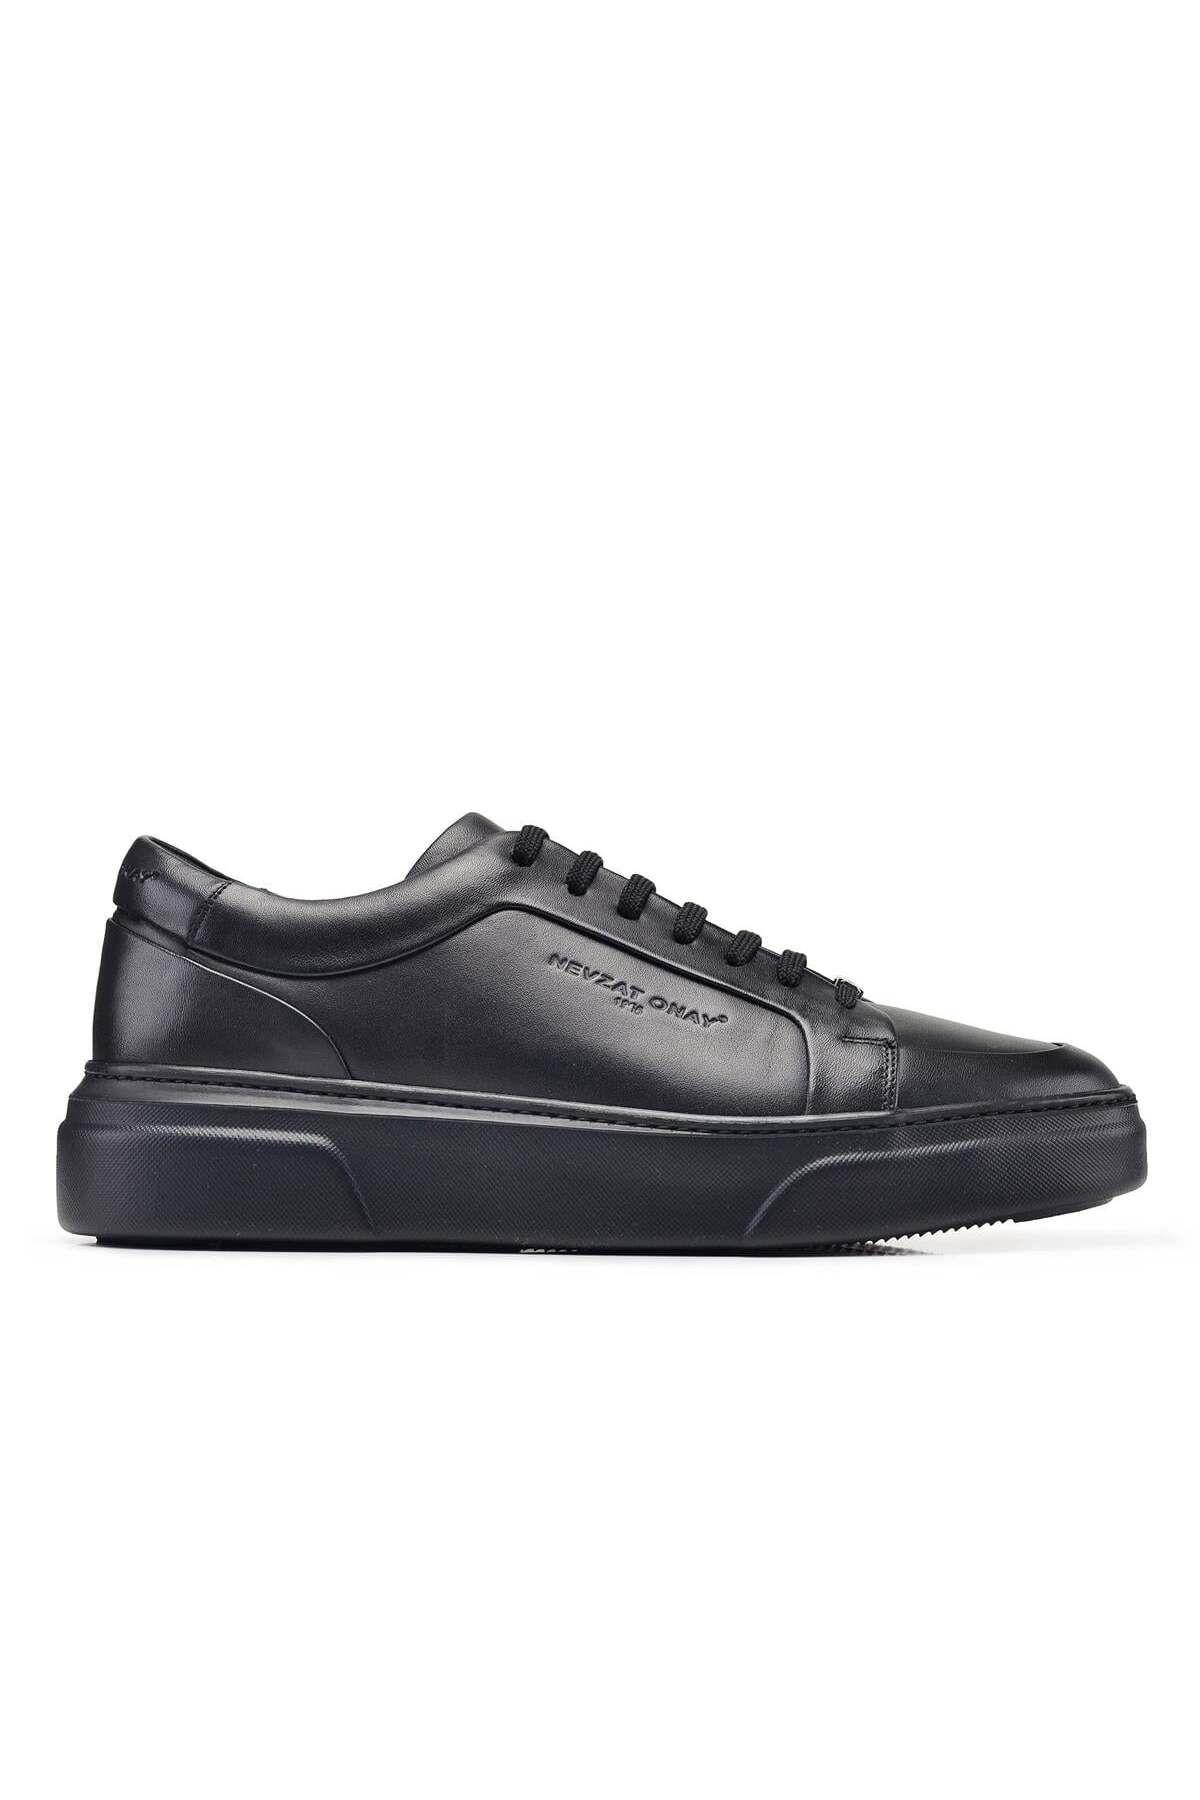 Nevzat Onay Siyah Bağcıklı Sneaker -92181-